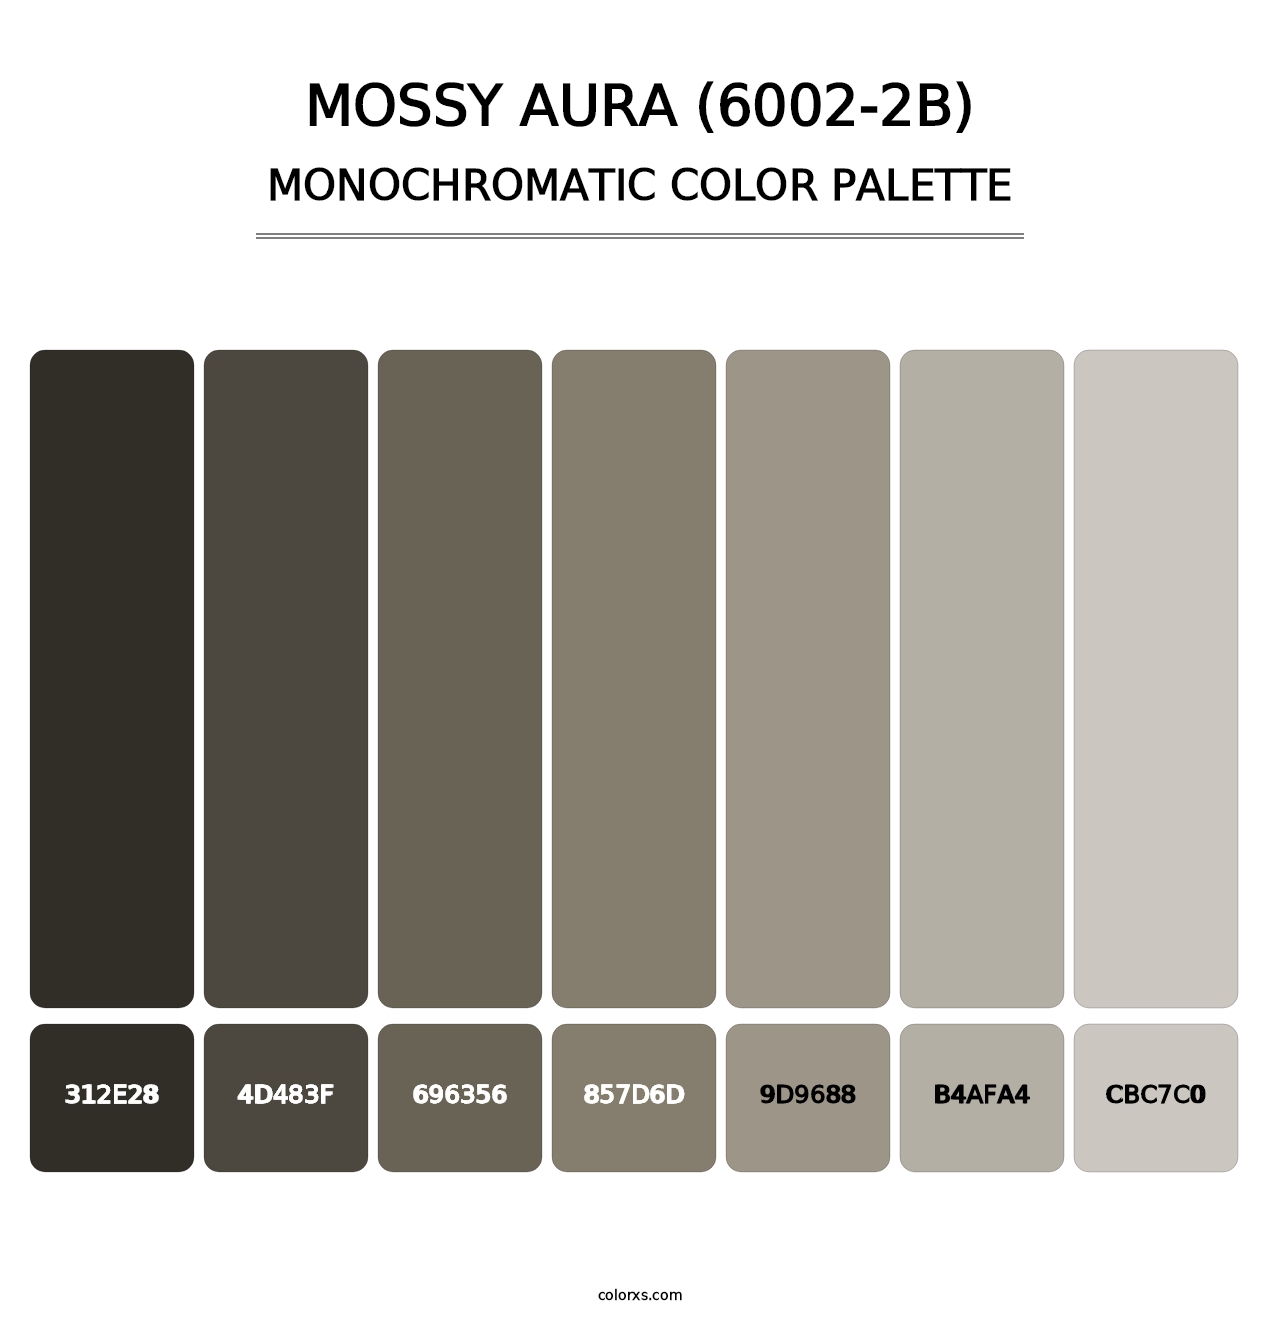 Mossy Aura (6002-2B) - Monochromatic Color Palette